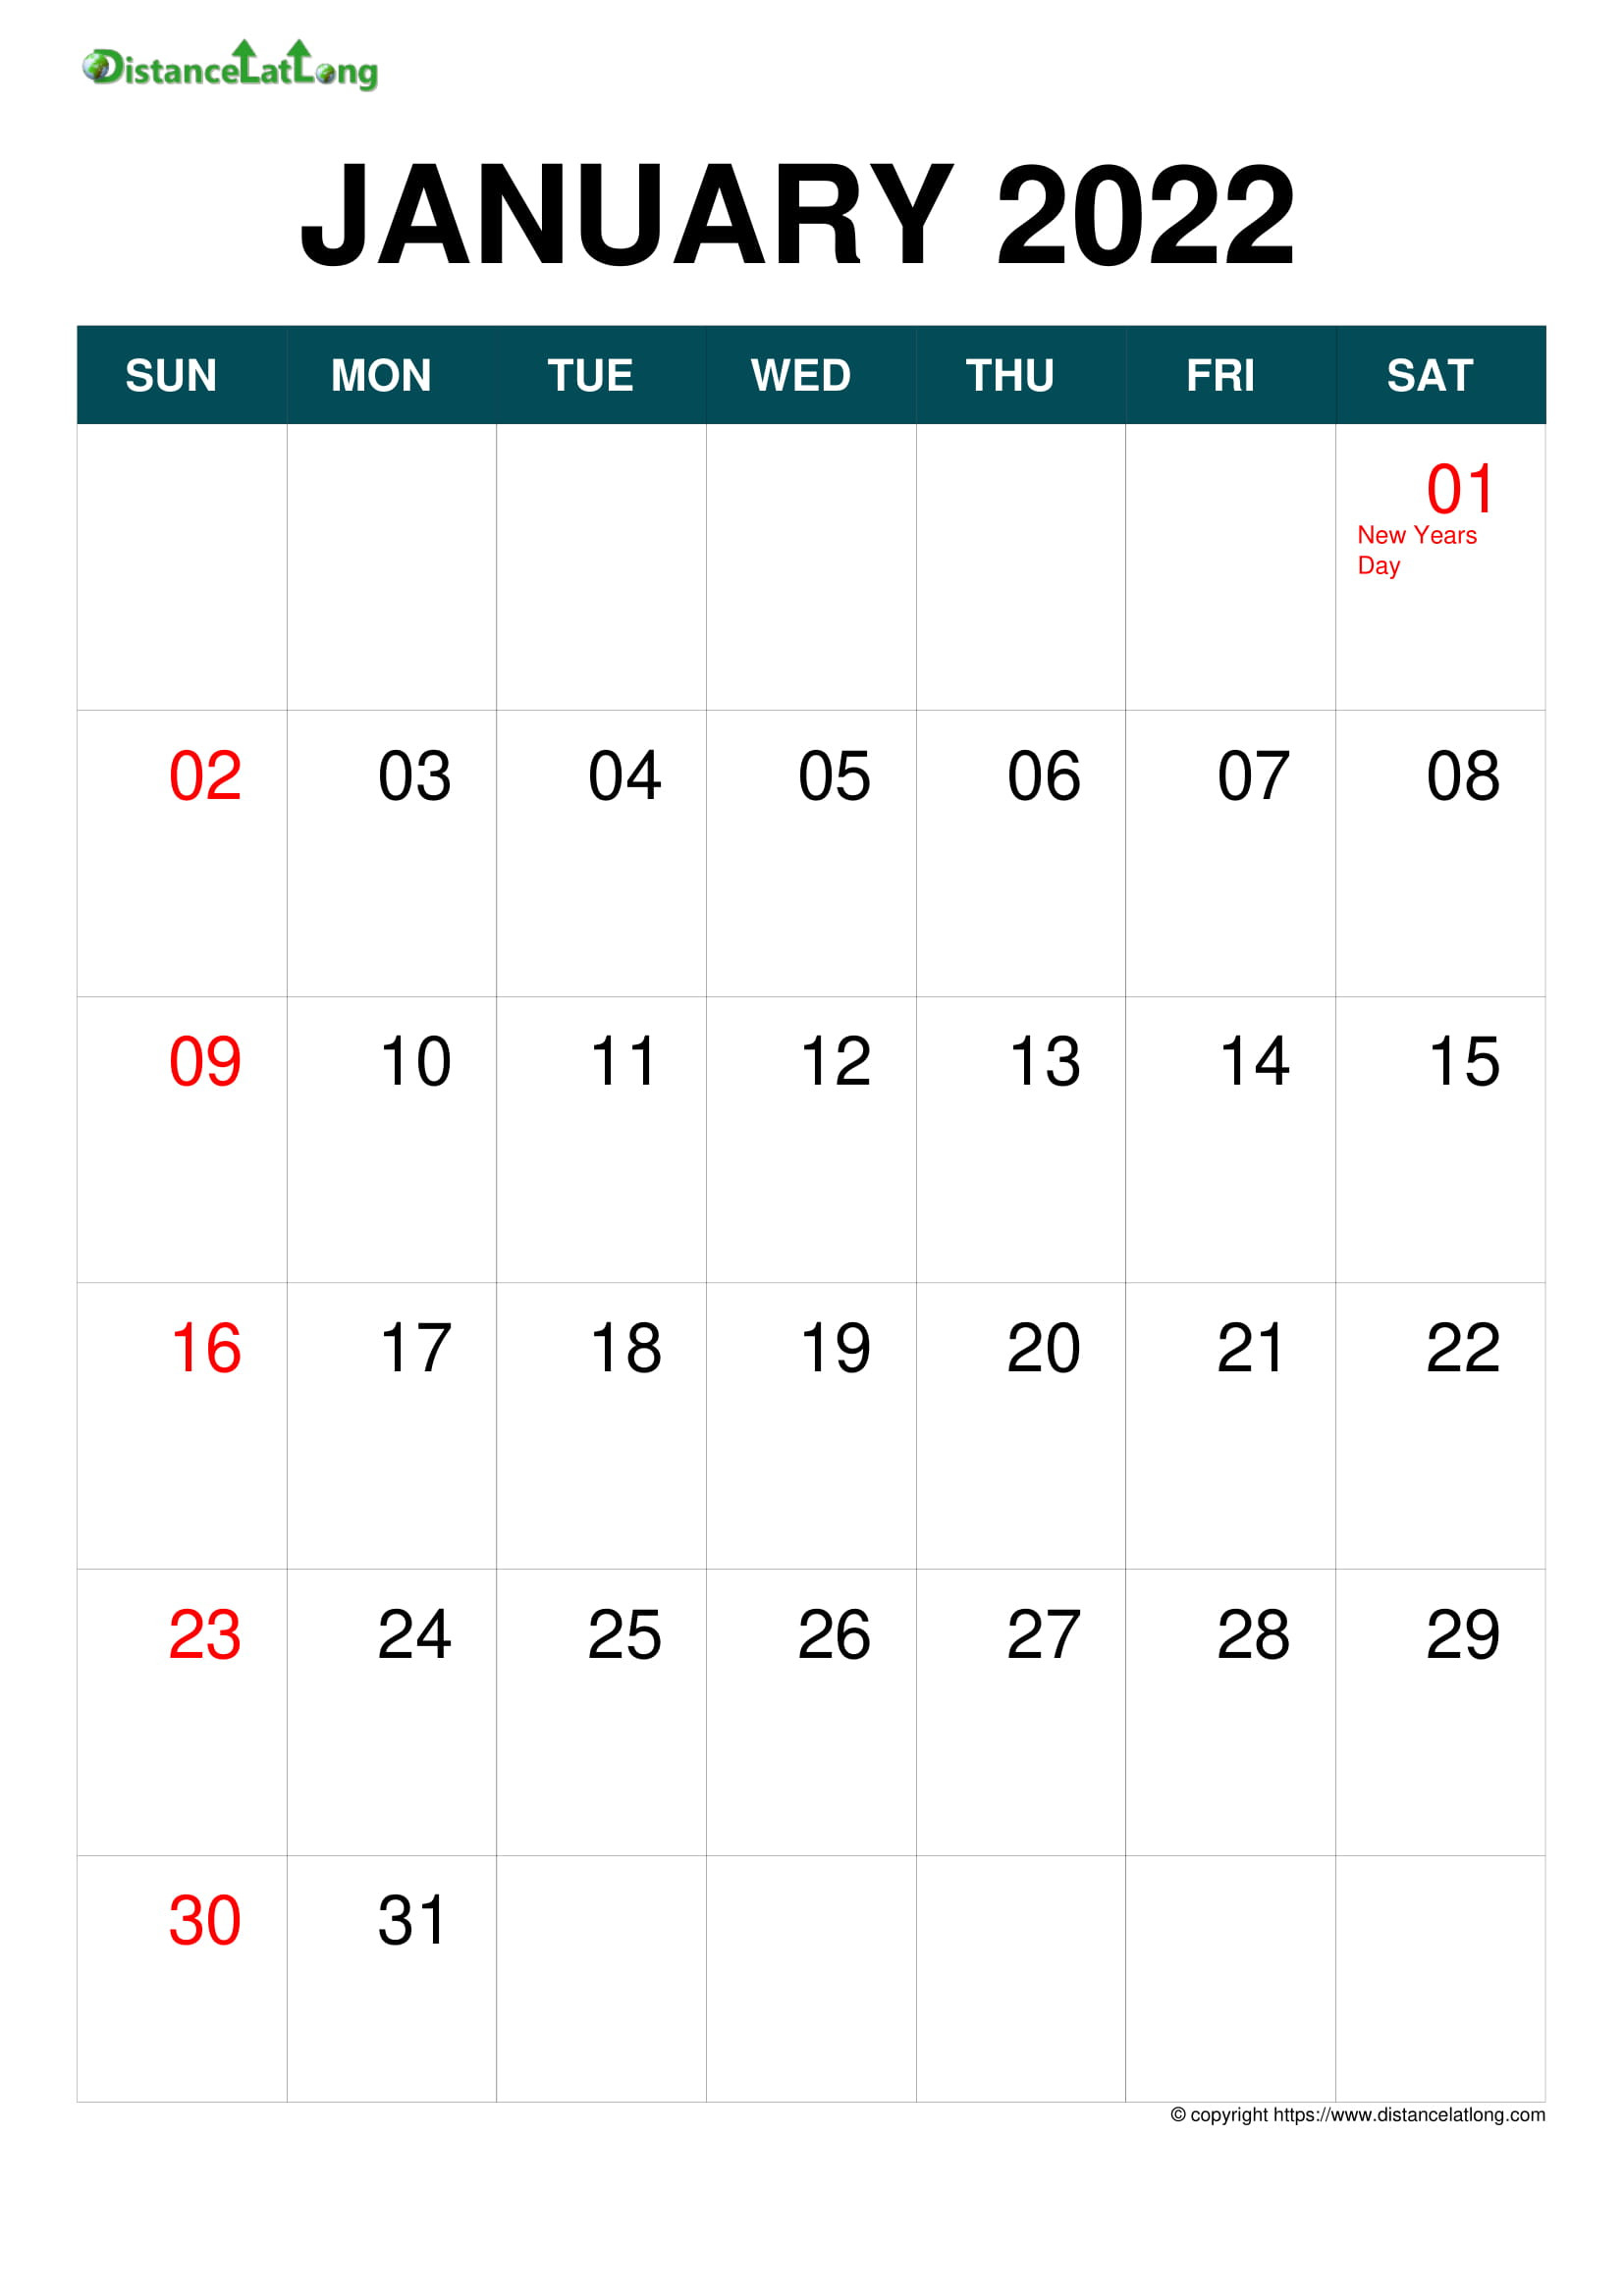 Downloads: 0 Version: 2022 File Size: 184 Kb-2022 Calendar With Holidays Uk